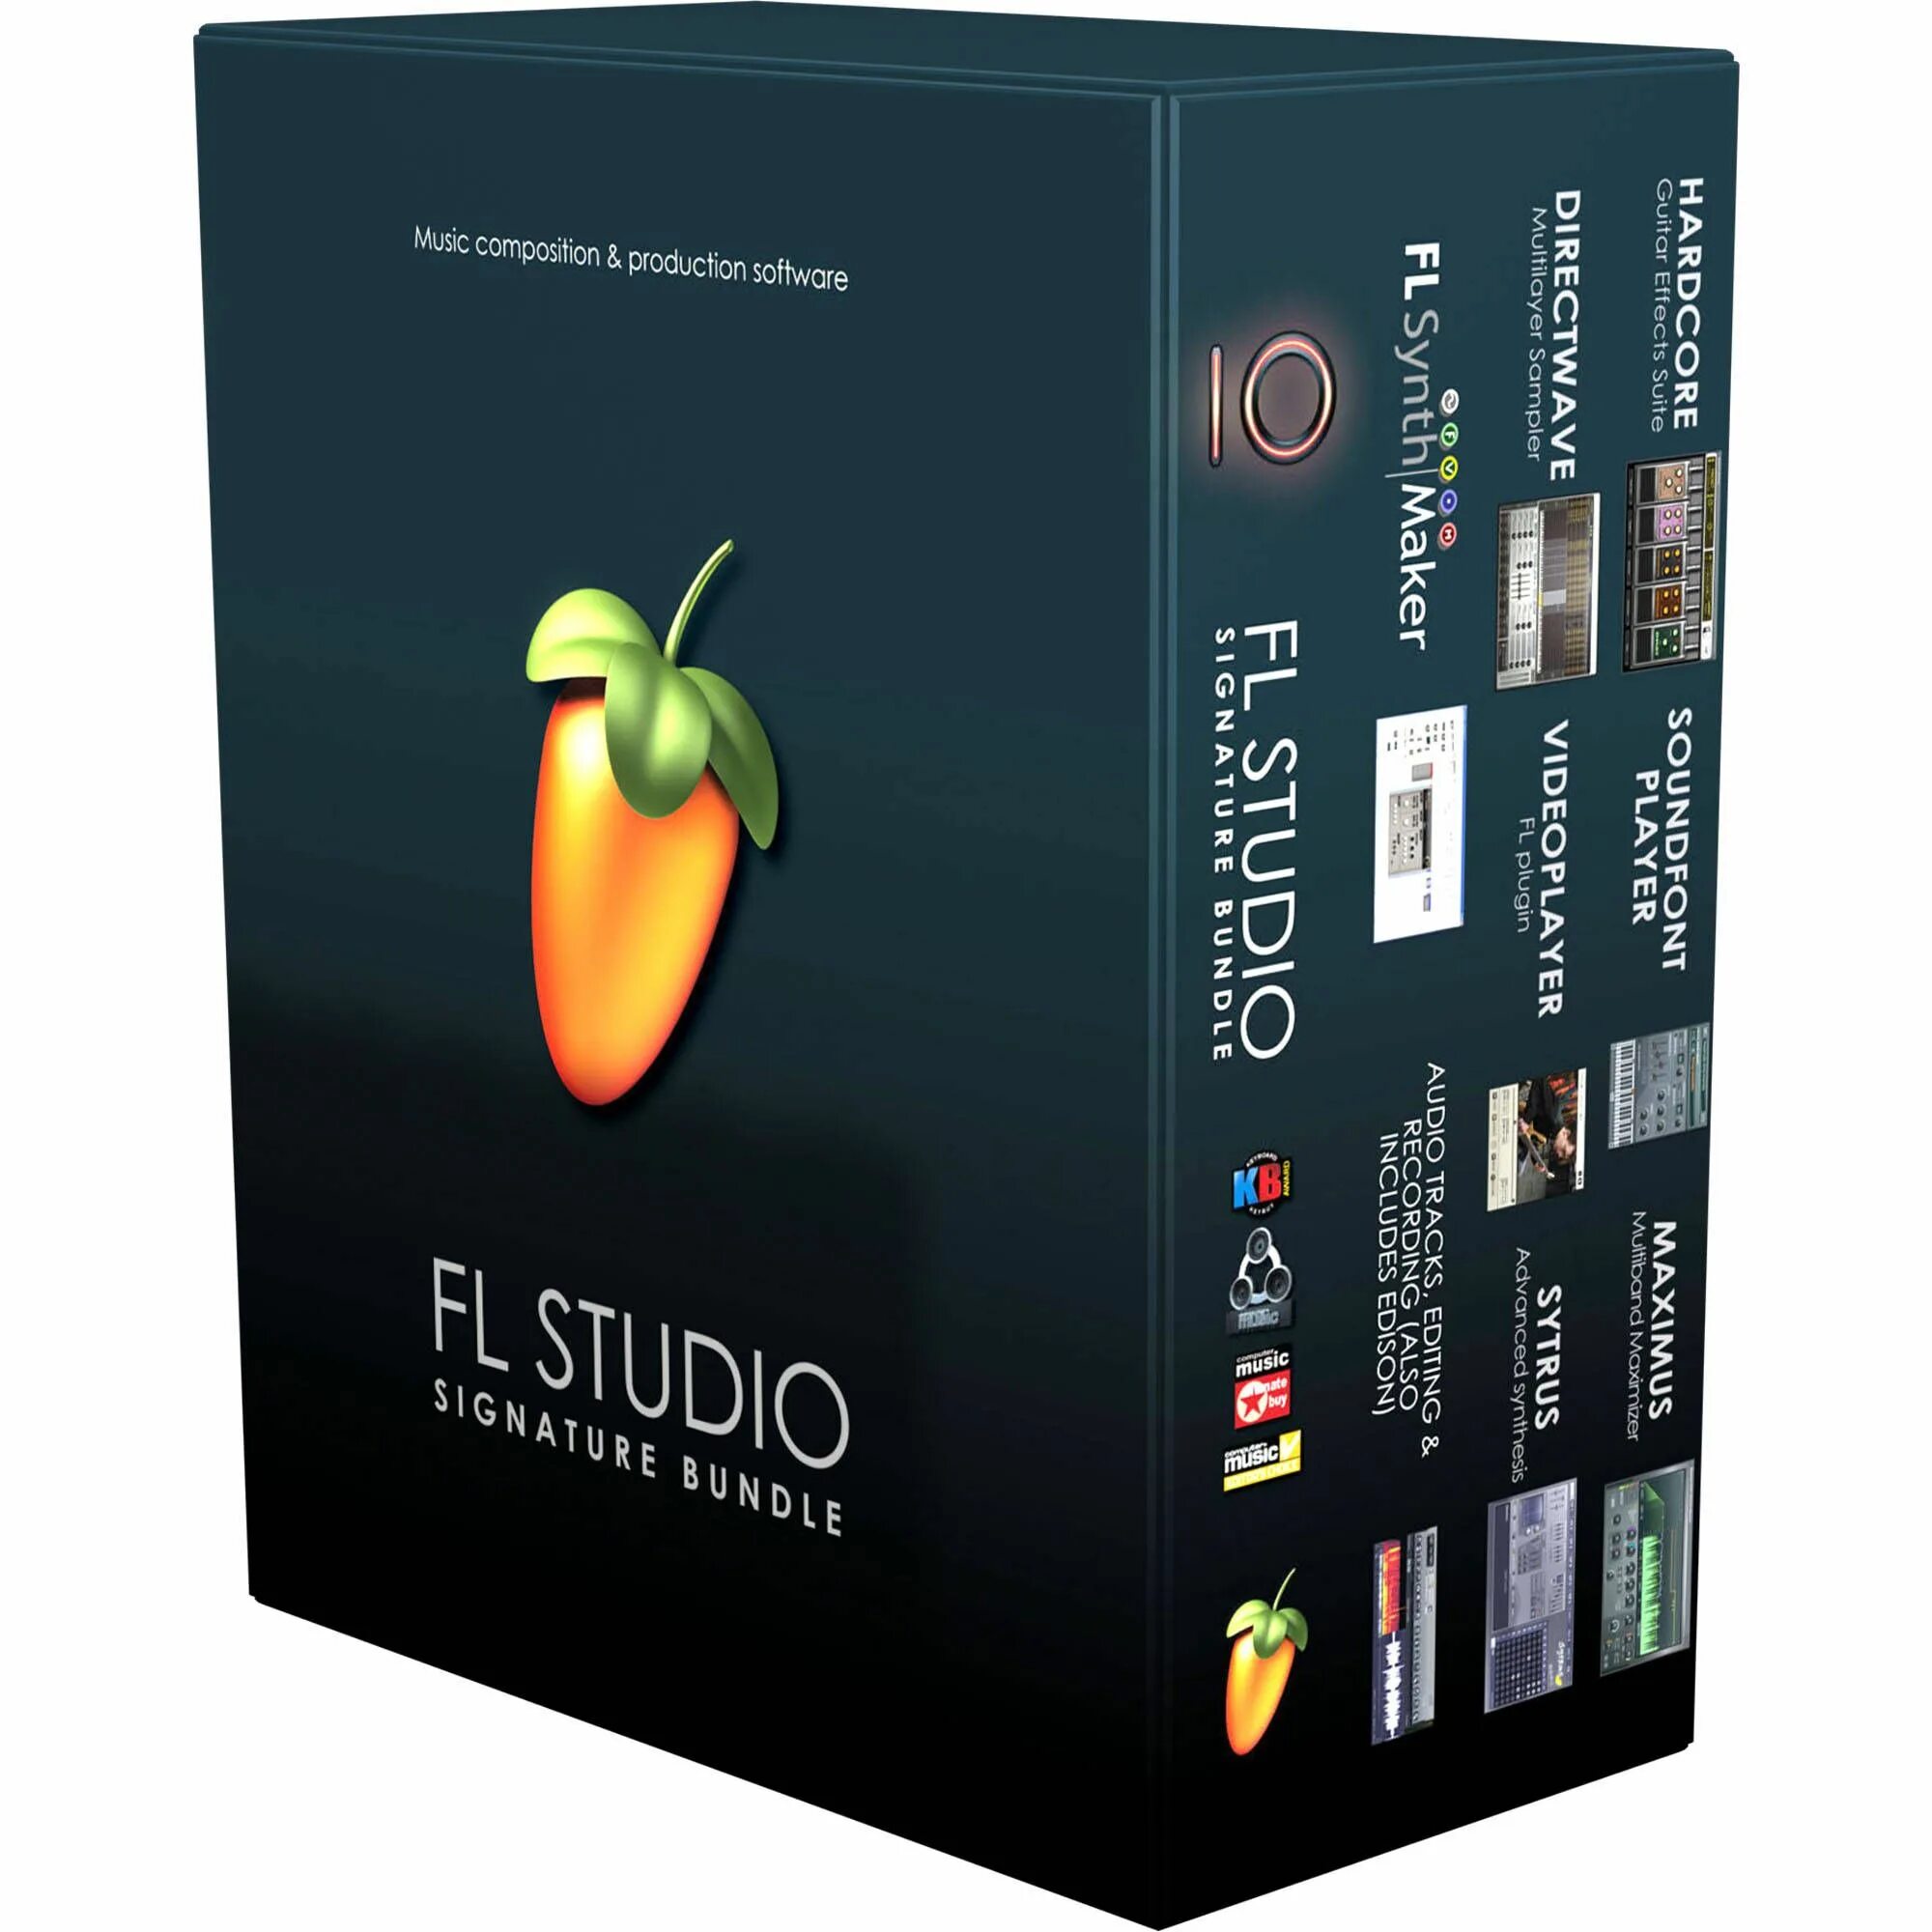 Fl studio mix. FL Studio Fruity Edition. Fruity loops Studio 20. Image-line - FL Studio Producer Edition 20.8.4. FL Studio 20 Producer Edition.